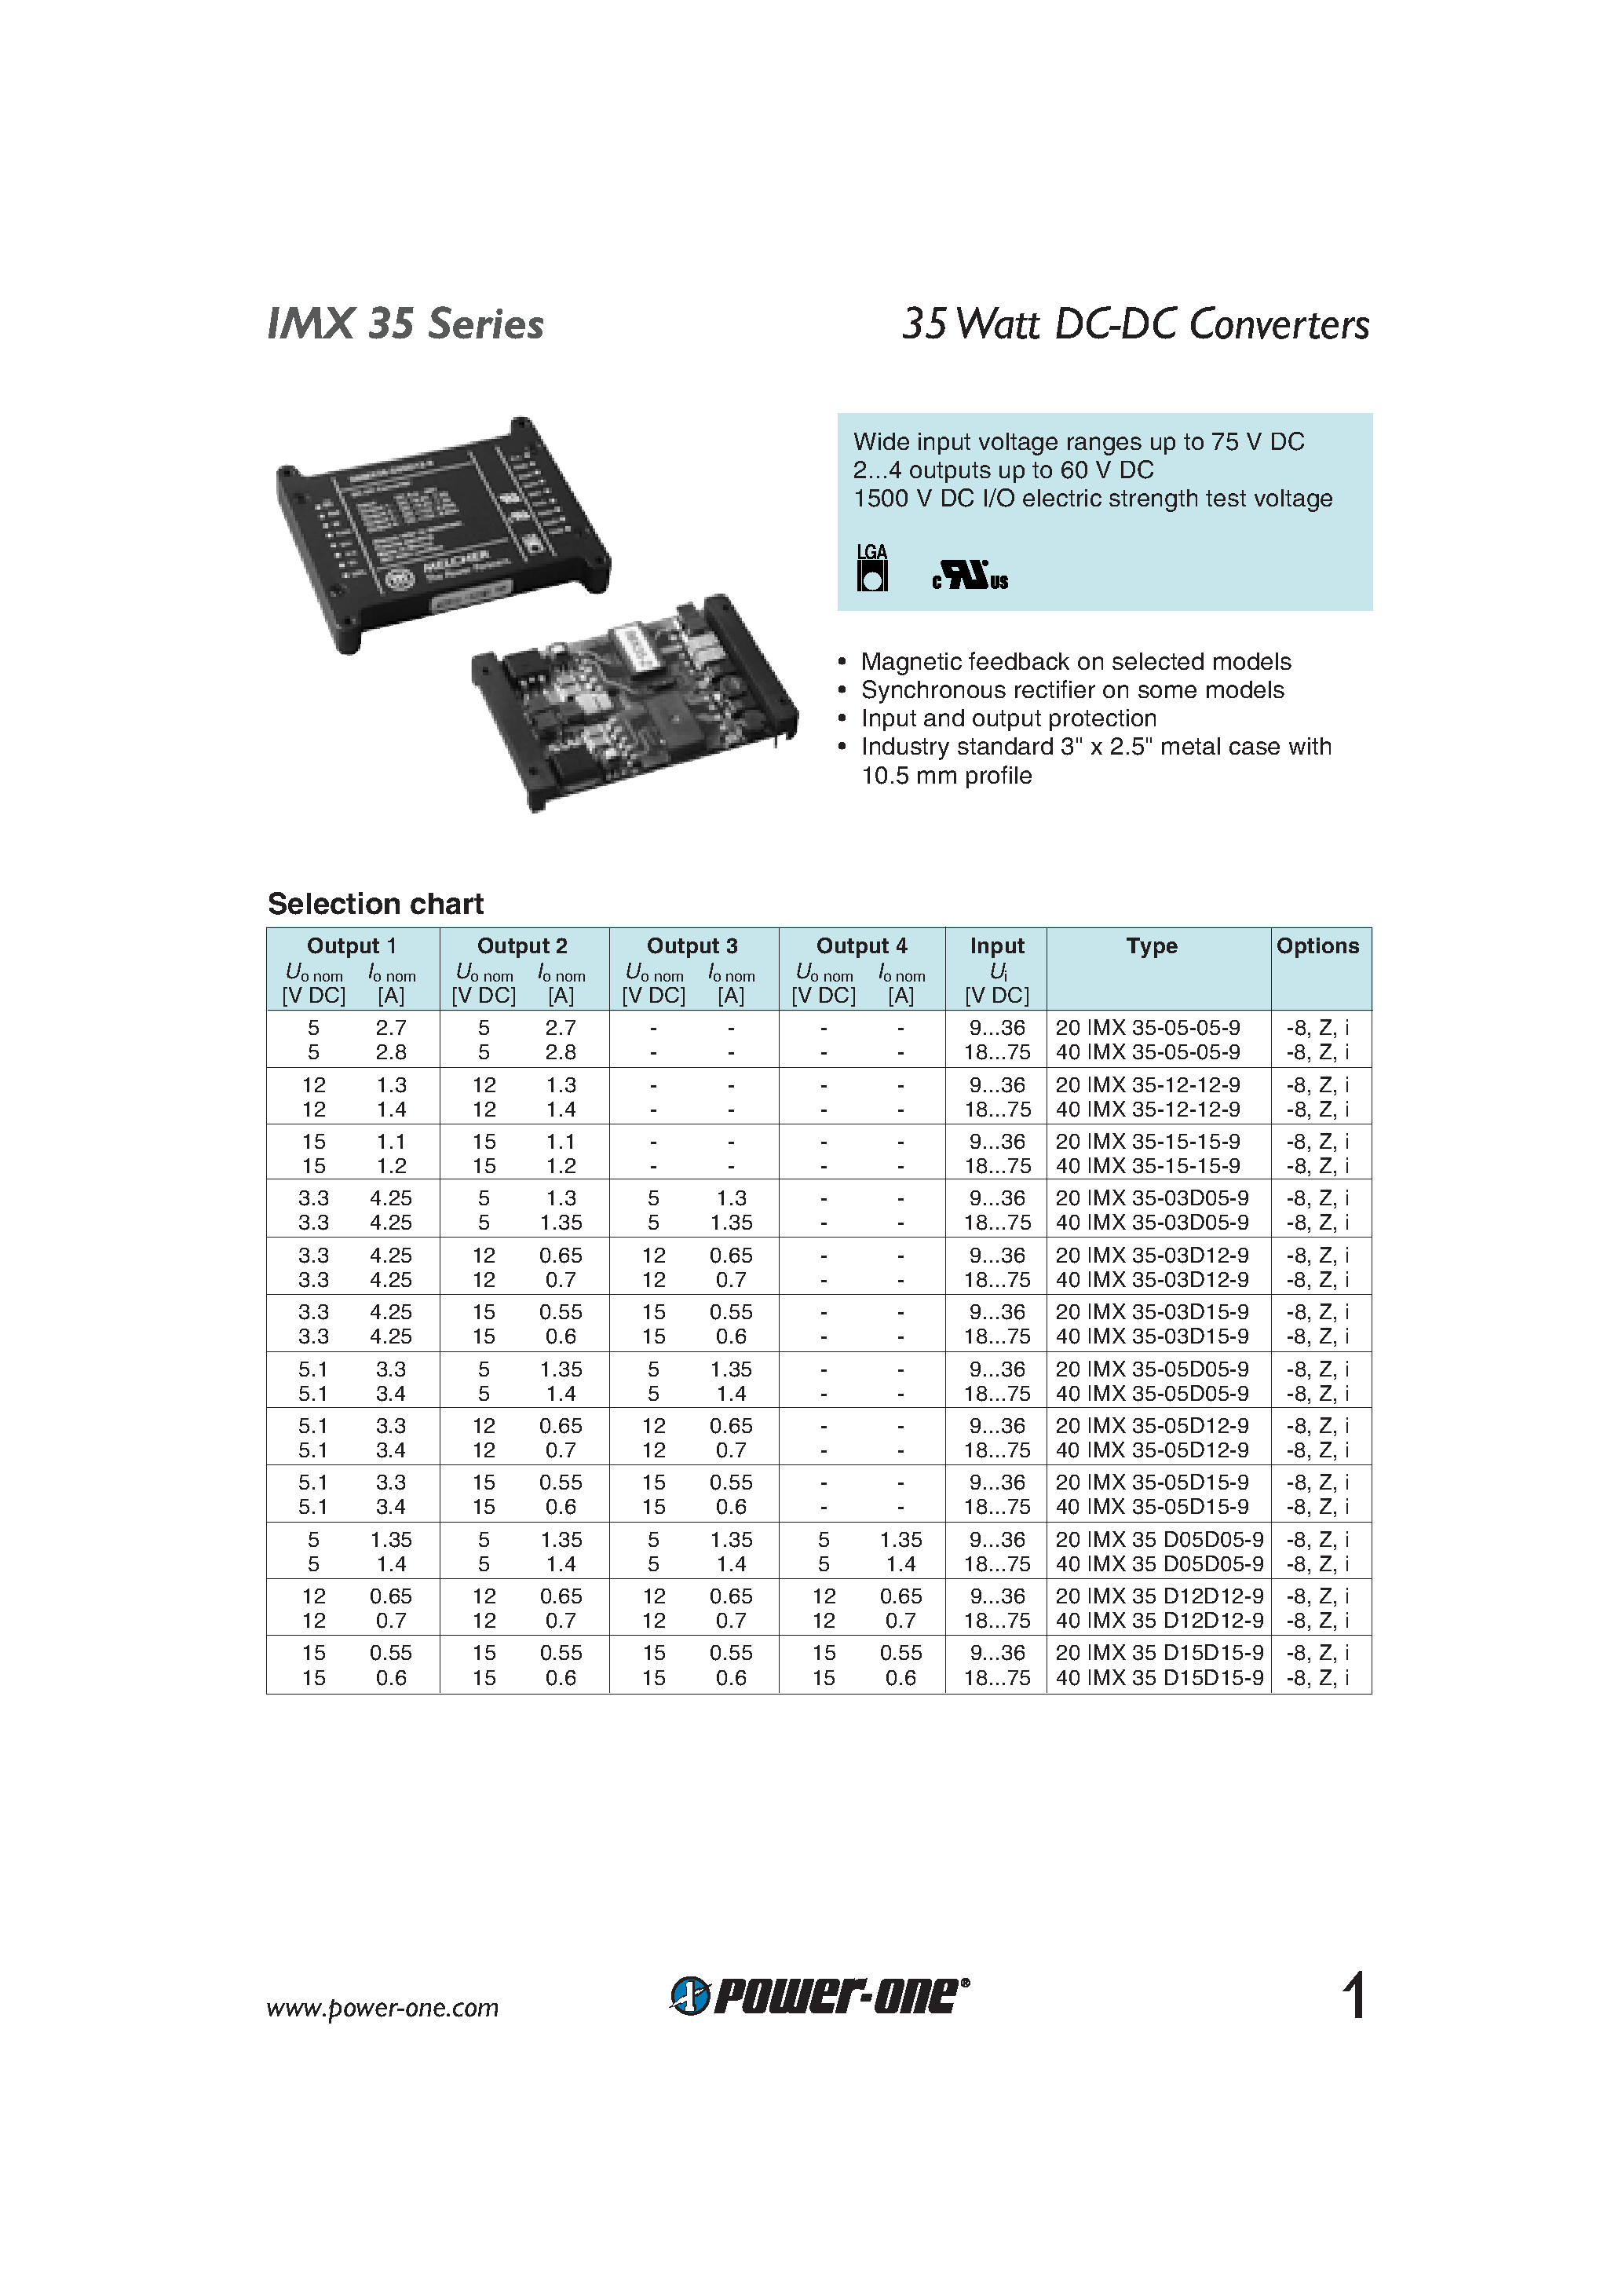 Datasheet 40IMX35-03D12-9 - 35 Watt DC-DC Converters page 1